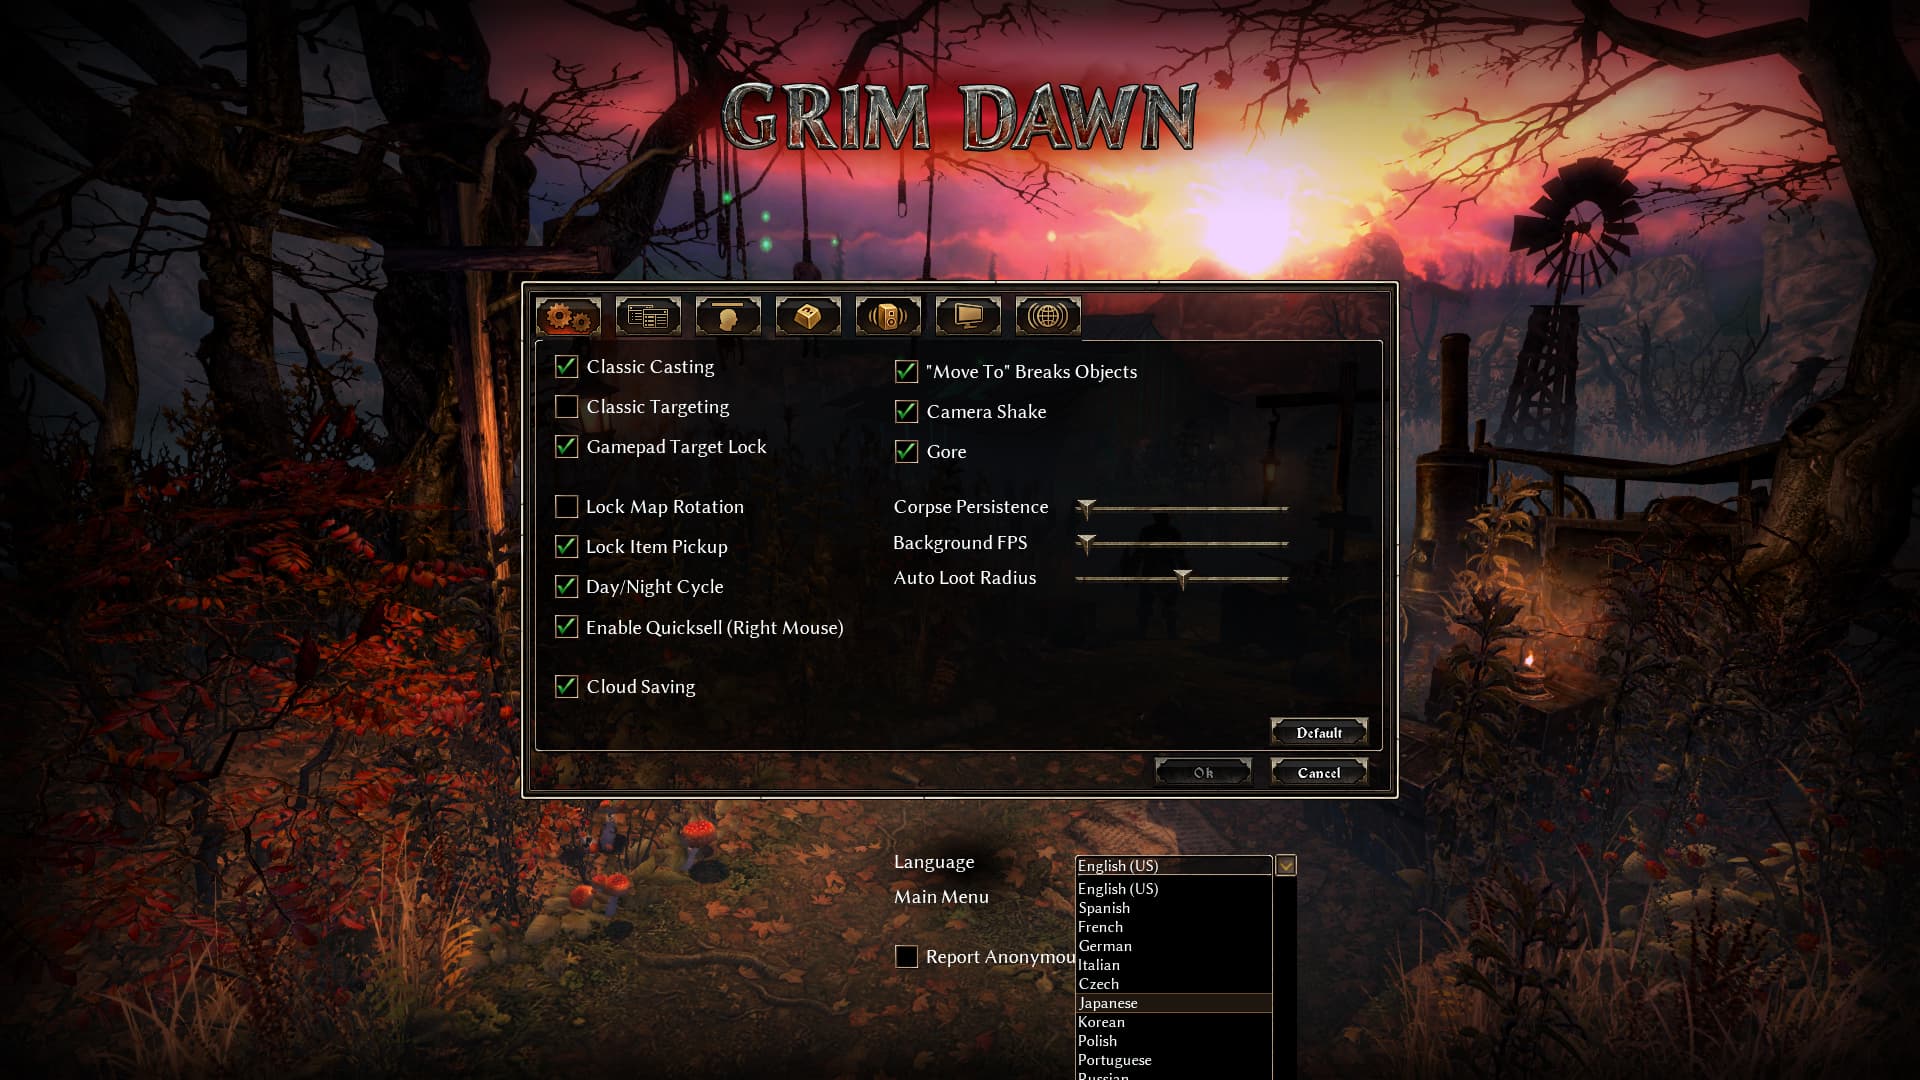 Grim Dawn Version v1.2.0.0 + v1.2.0.1 + v1.2.0.2 + v1.2.0.3